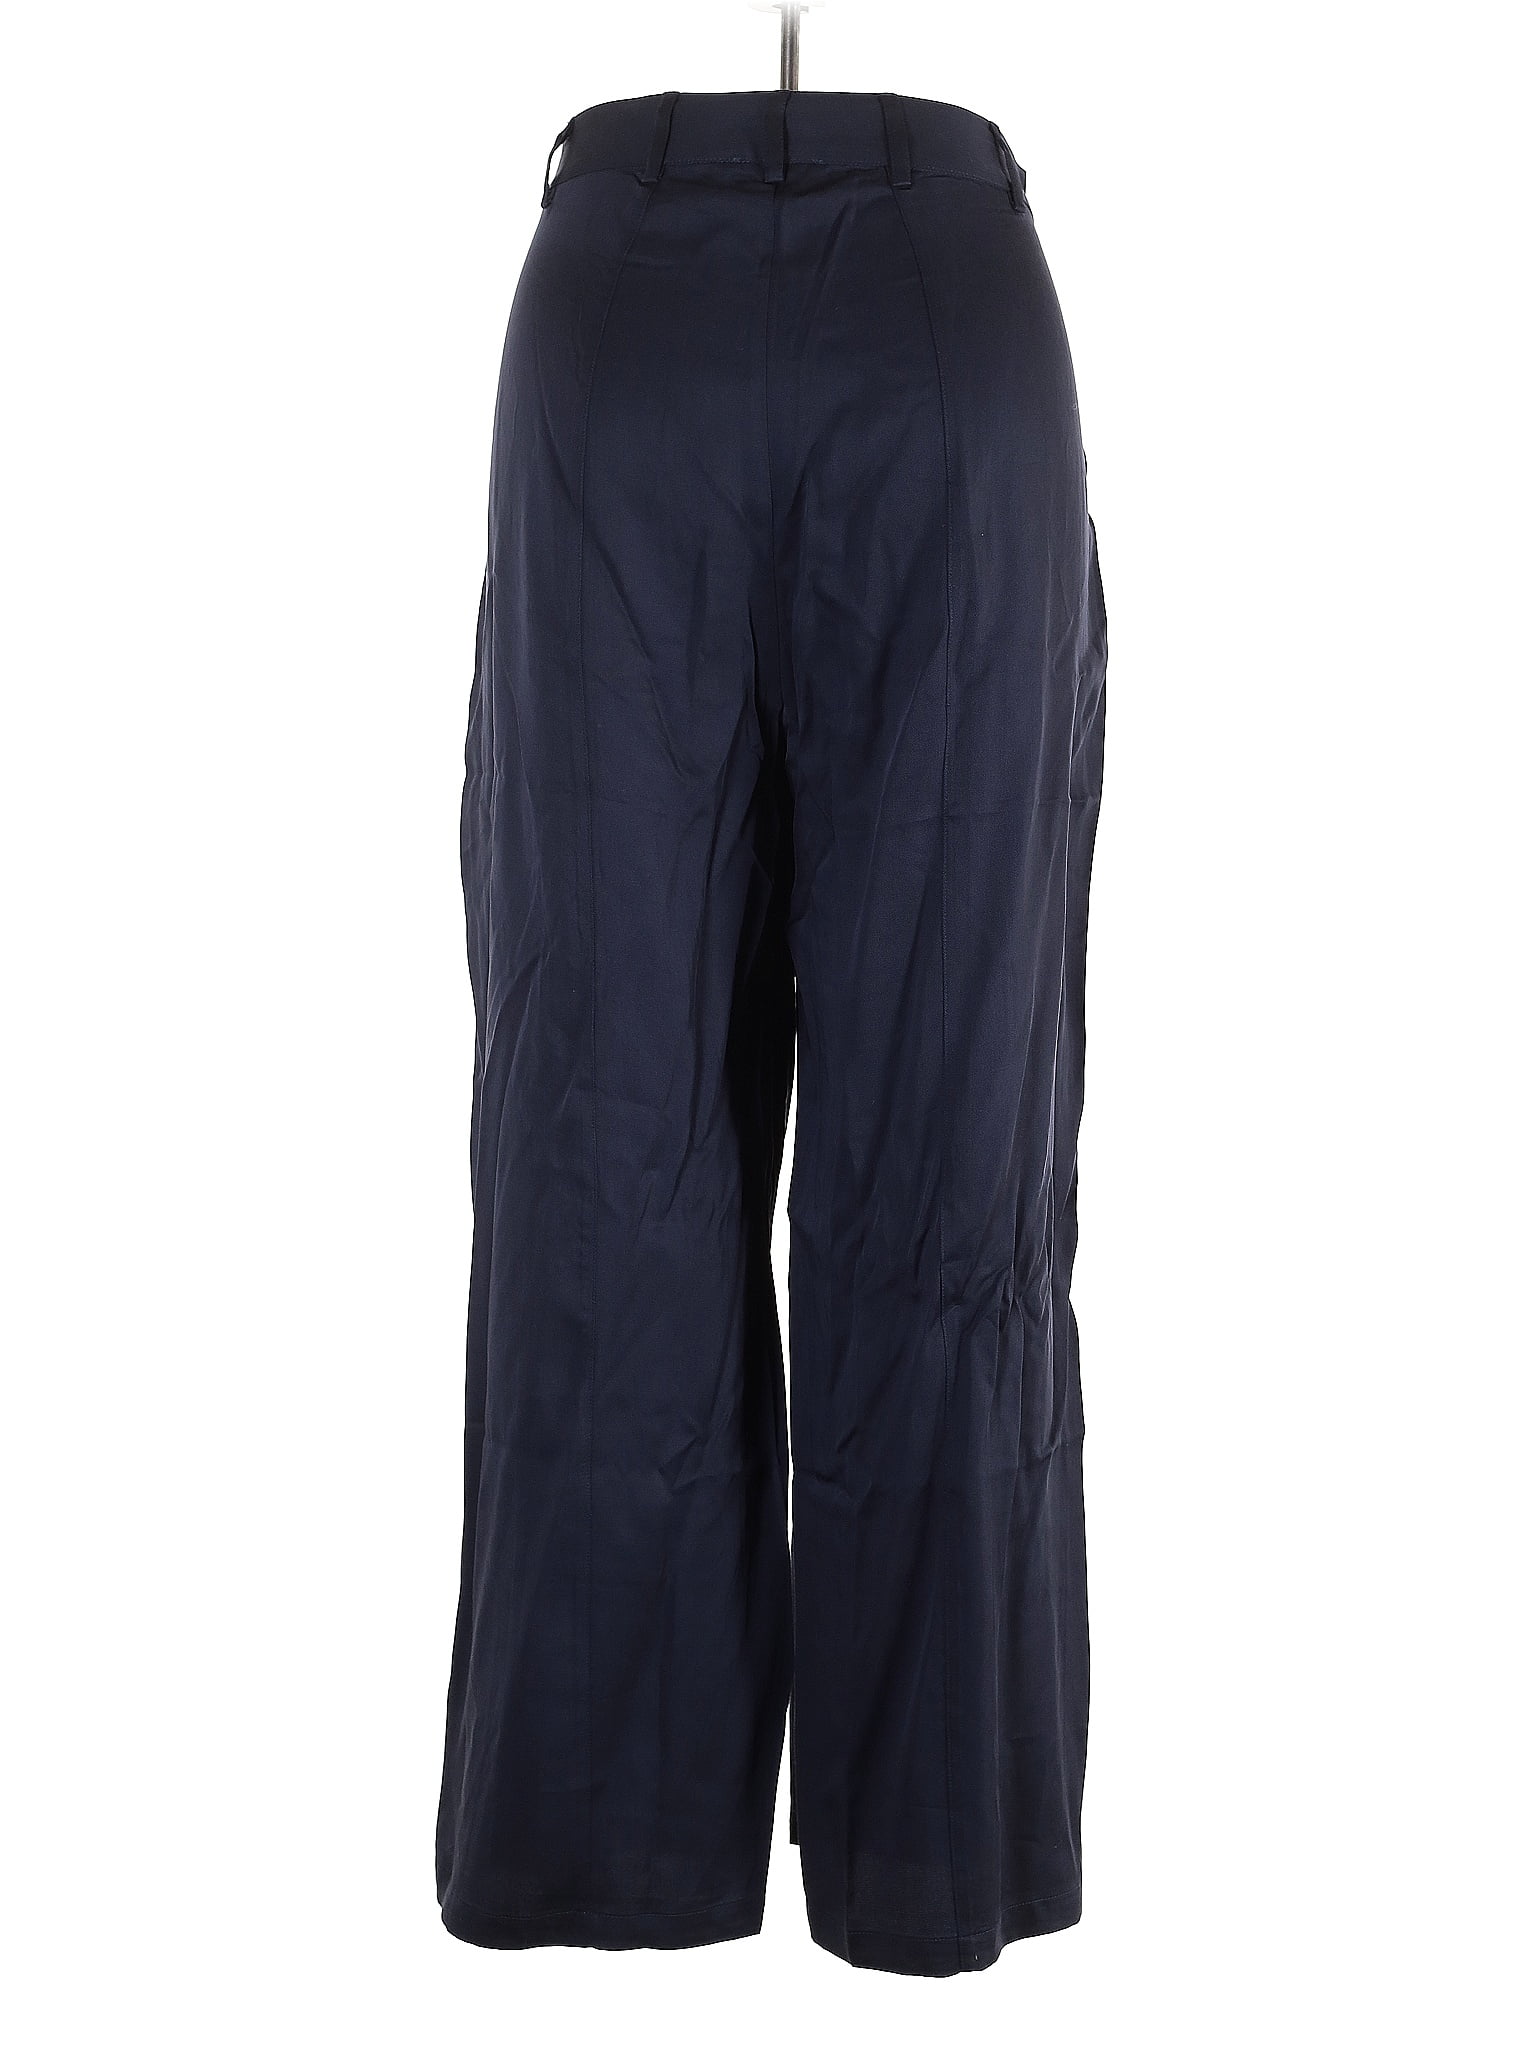 Soncy 100% Tencel Lyocell Blue Casual Pants Size 2X (2) (Plus